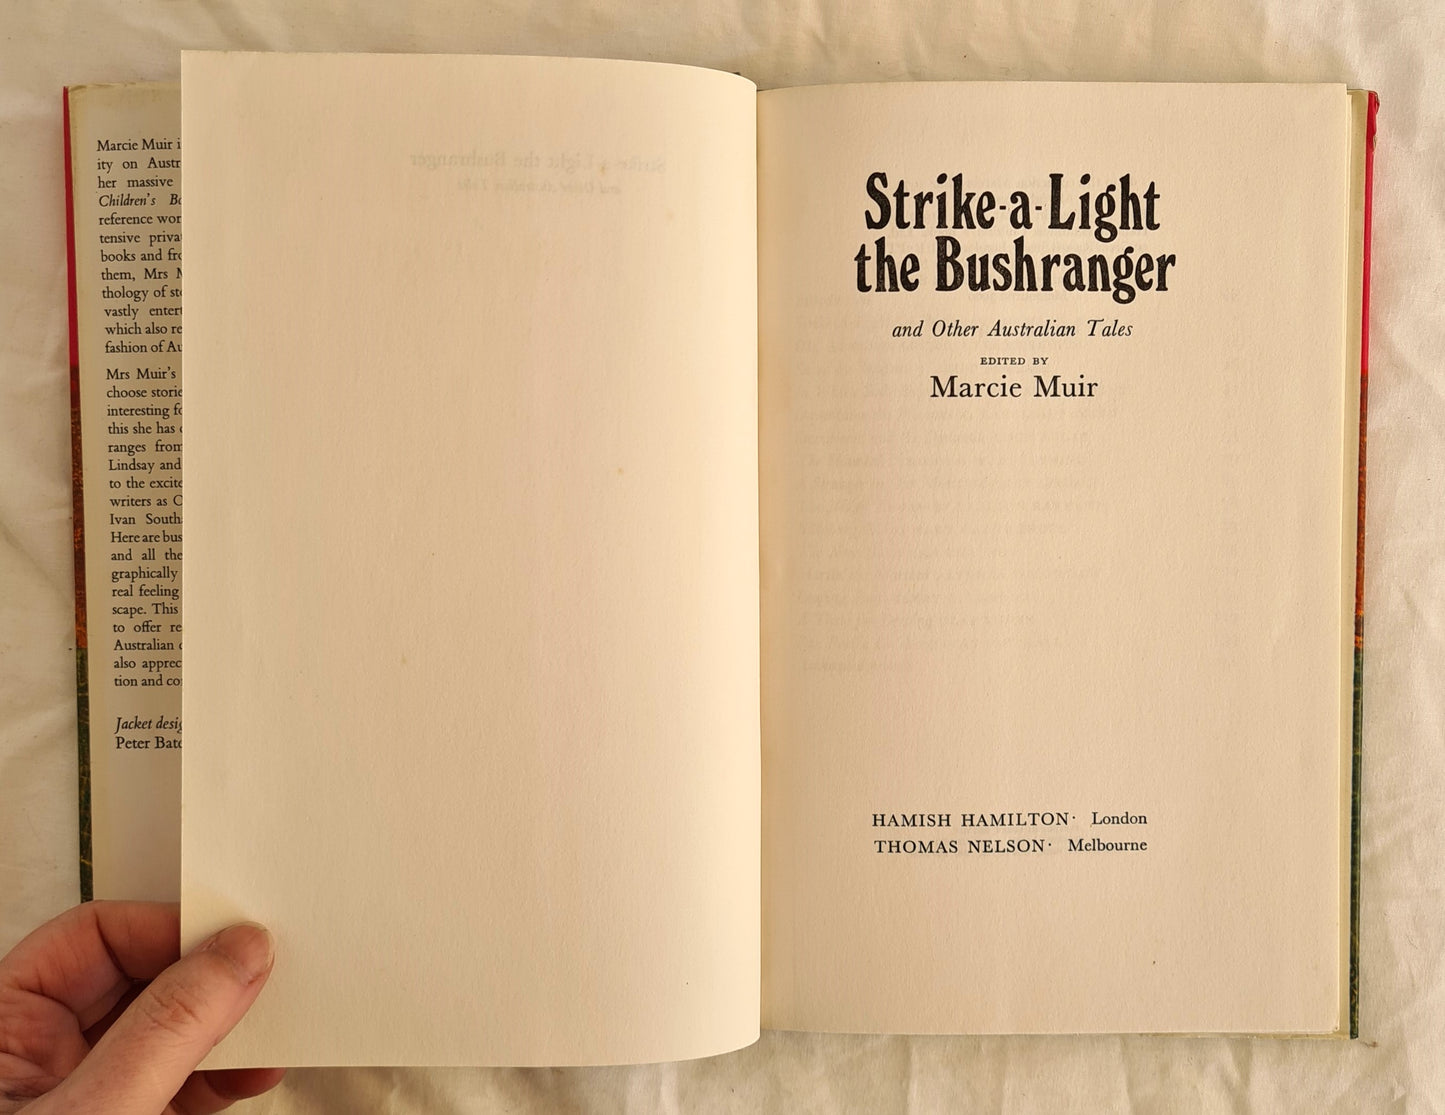 Strike-a-Light the Bushranger by Marcie Muir